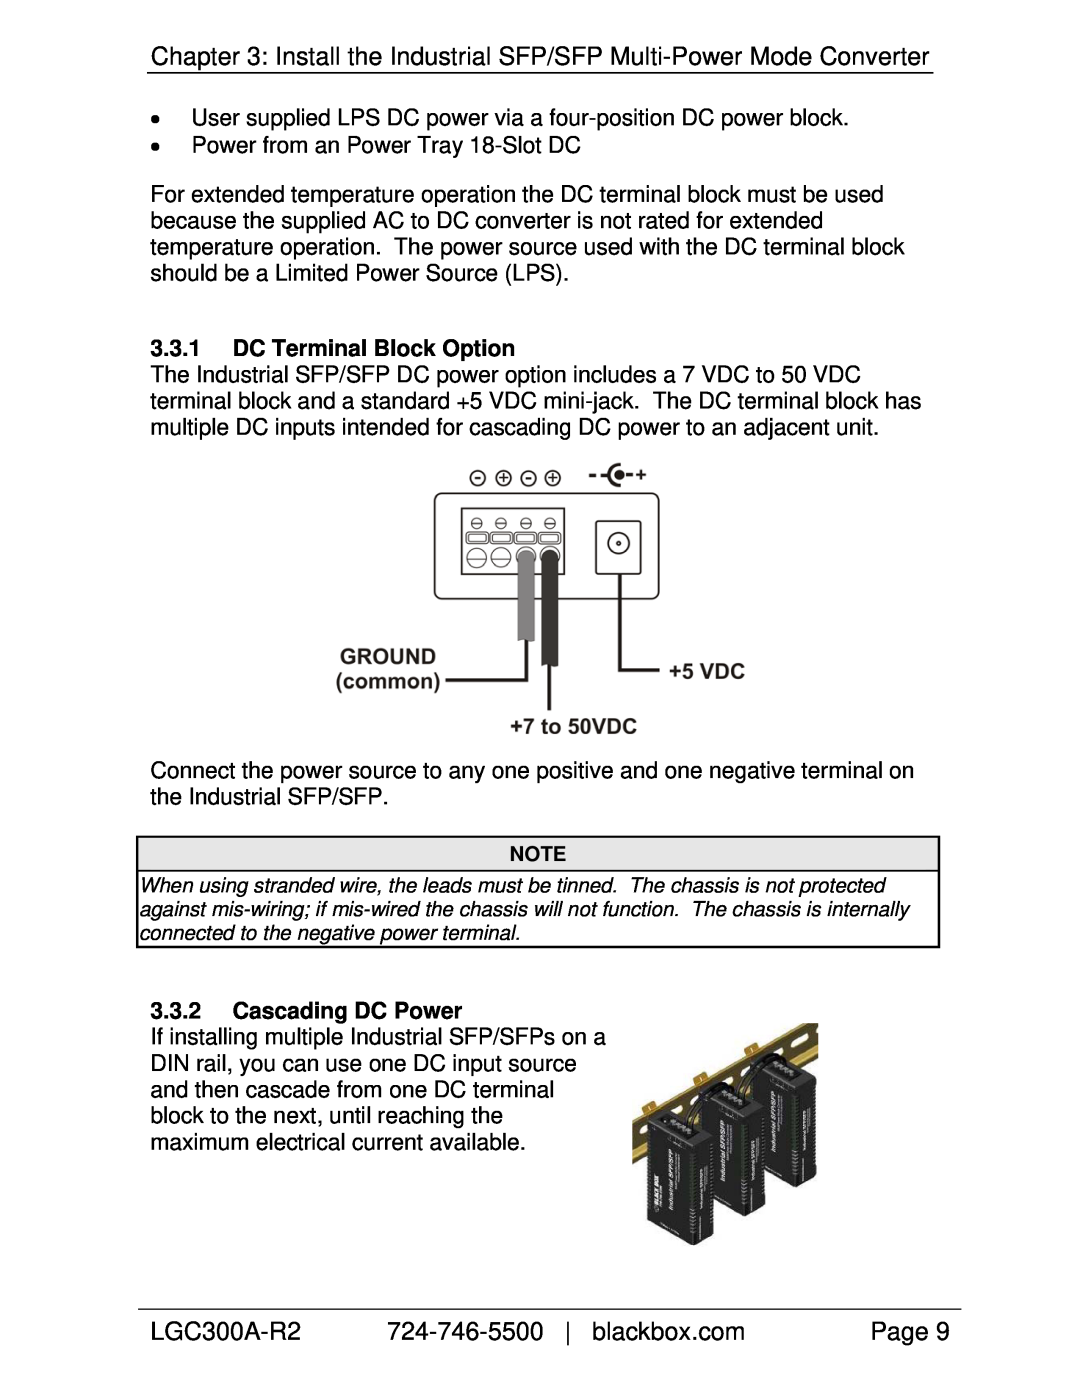 Black Box Industrial SFP/SFP Multi-Power Mode Converter DC Terminal Block Option, Cascading DC Power, LGC300A-R2, Page 